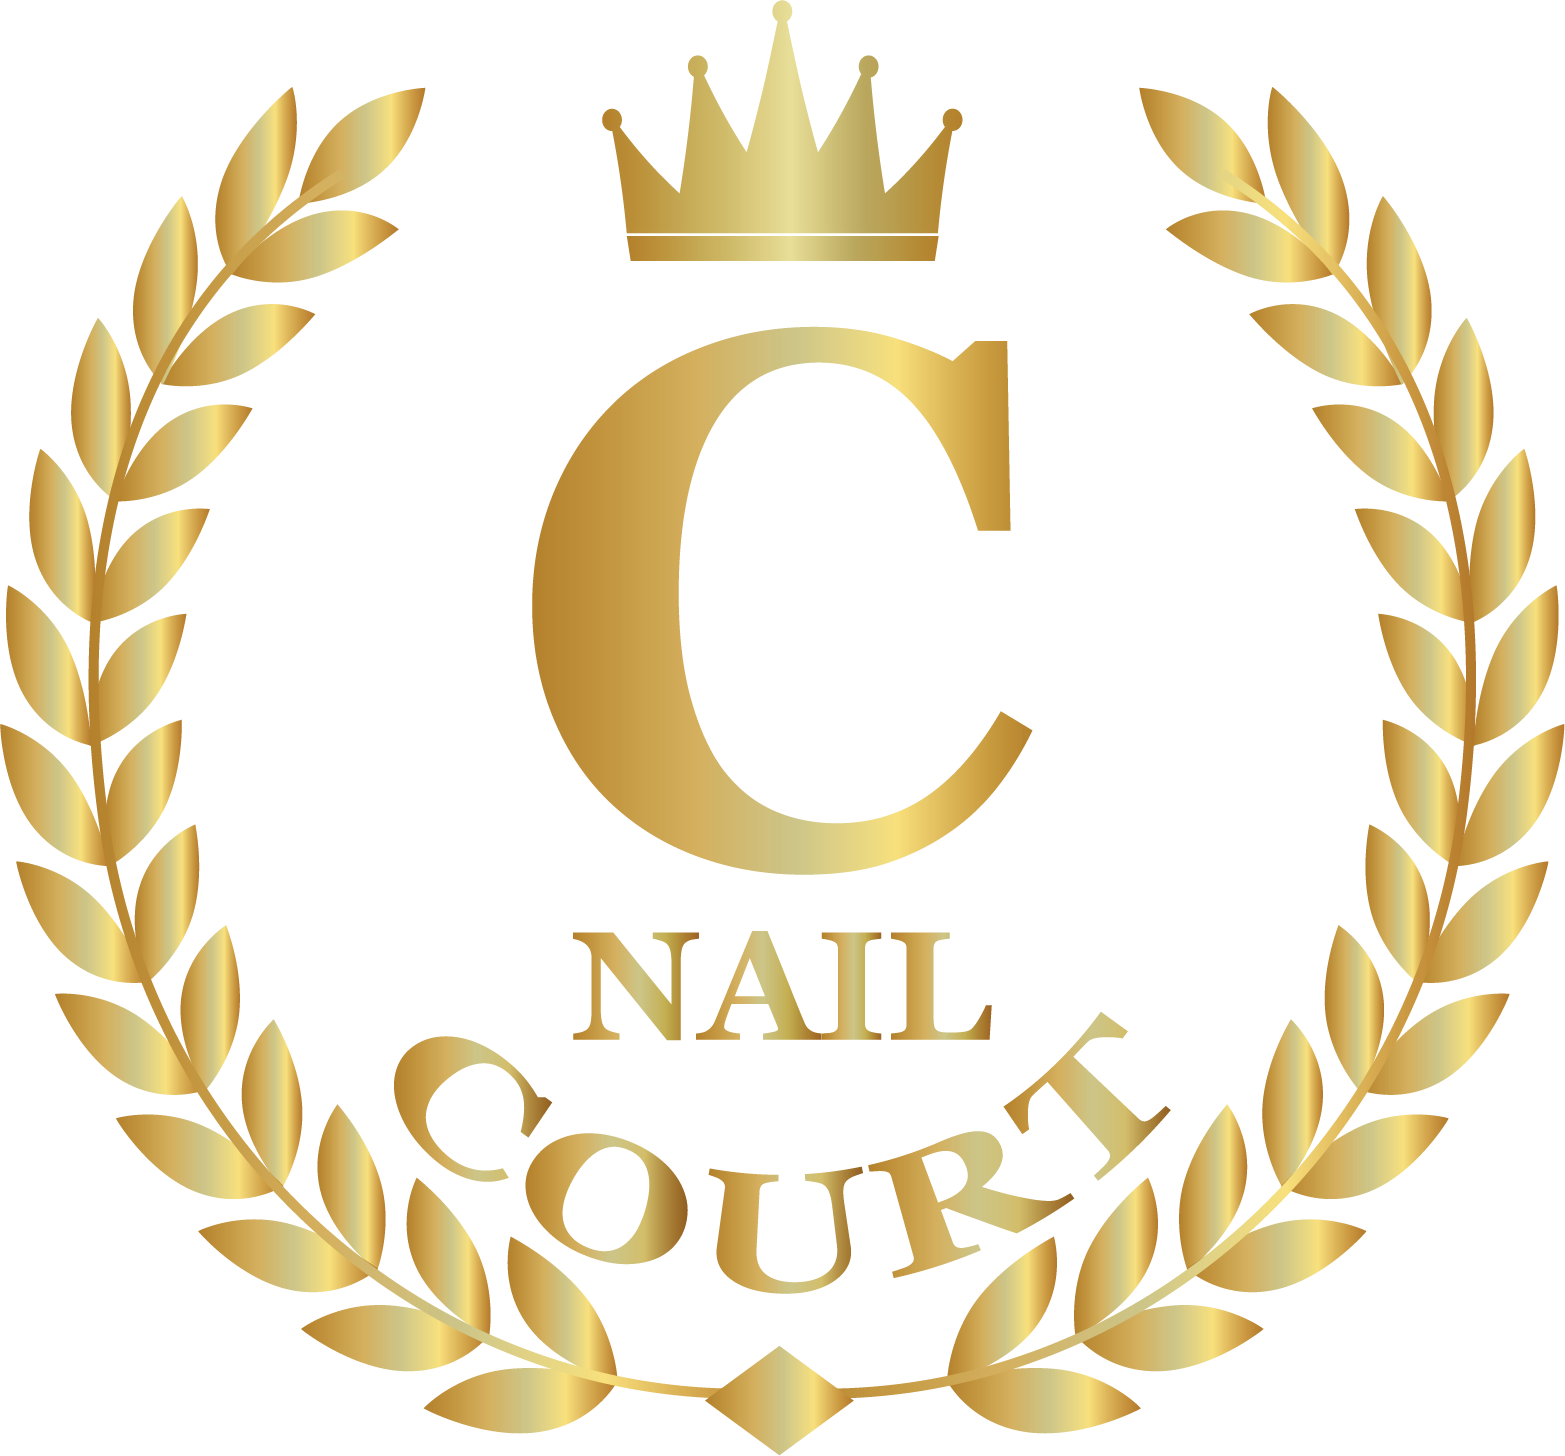 Nail Court